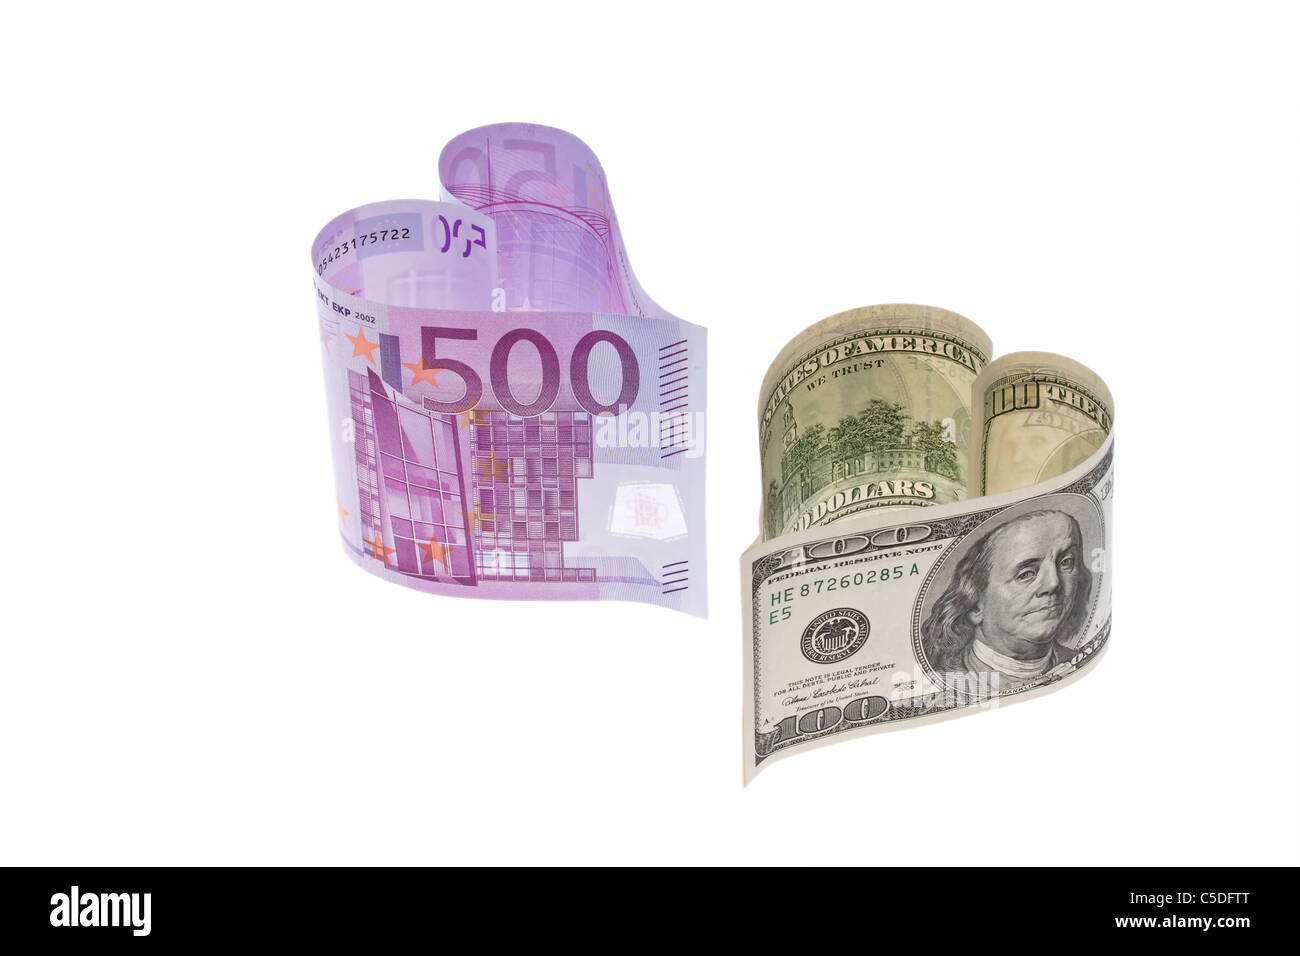 Euro banknotes and U.S. dollars. Stock Photo